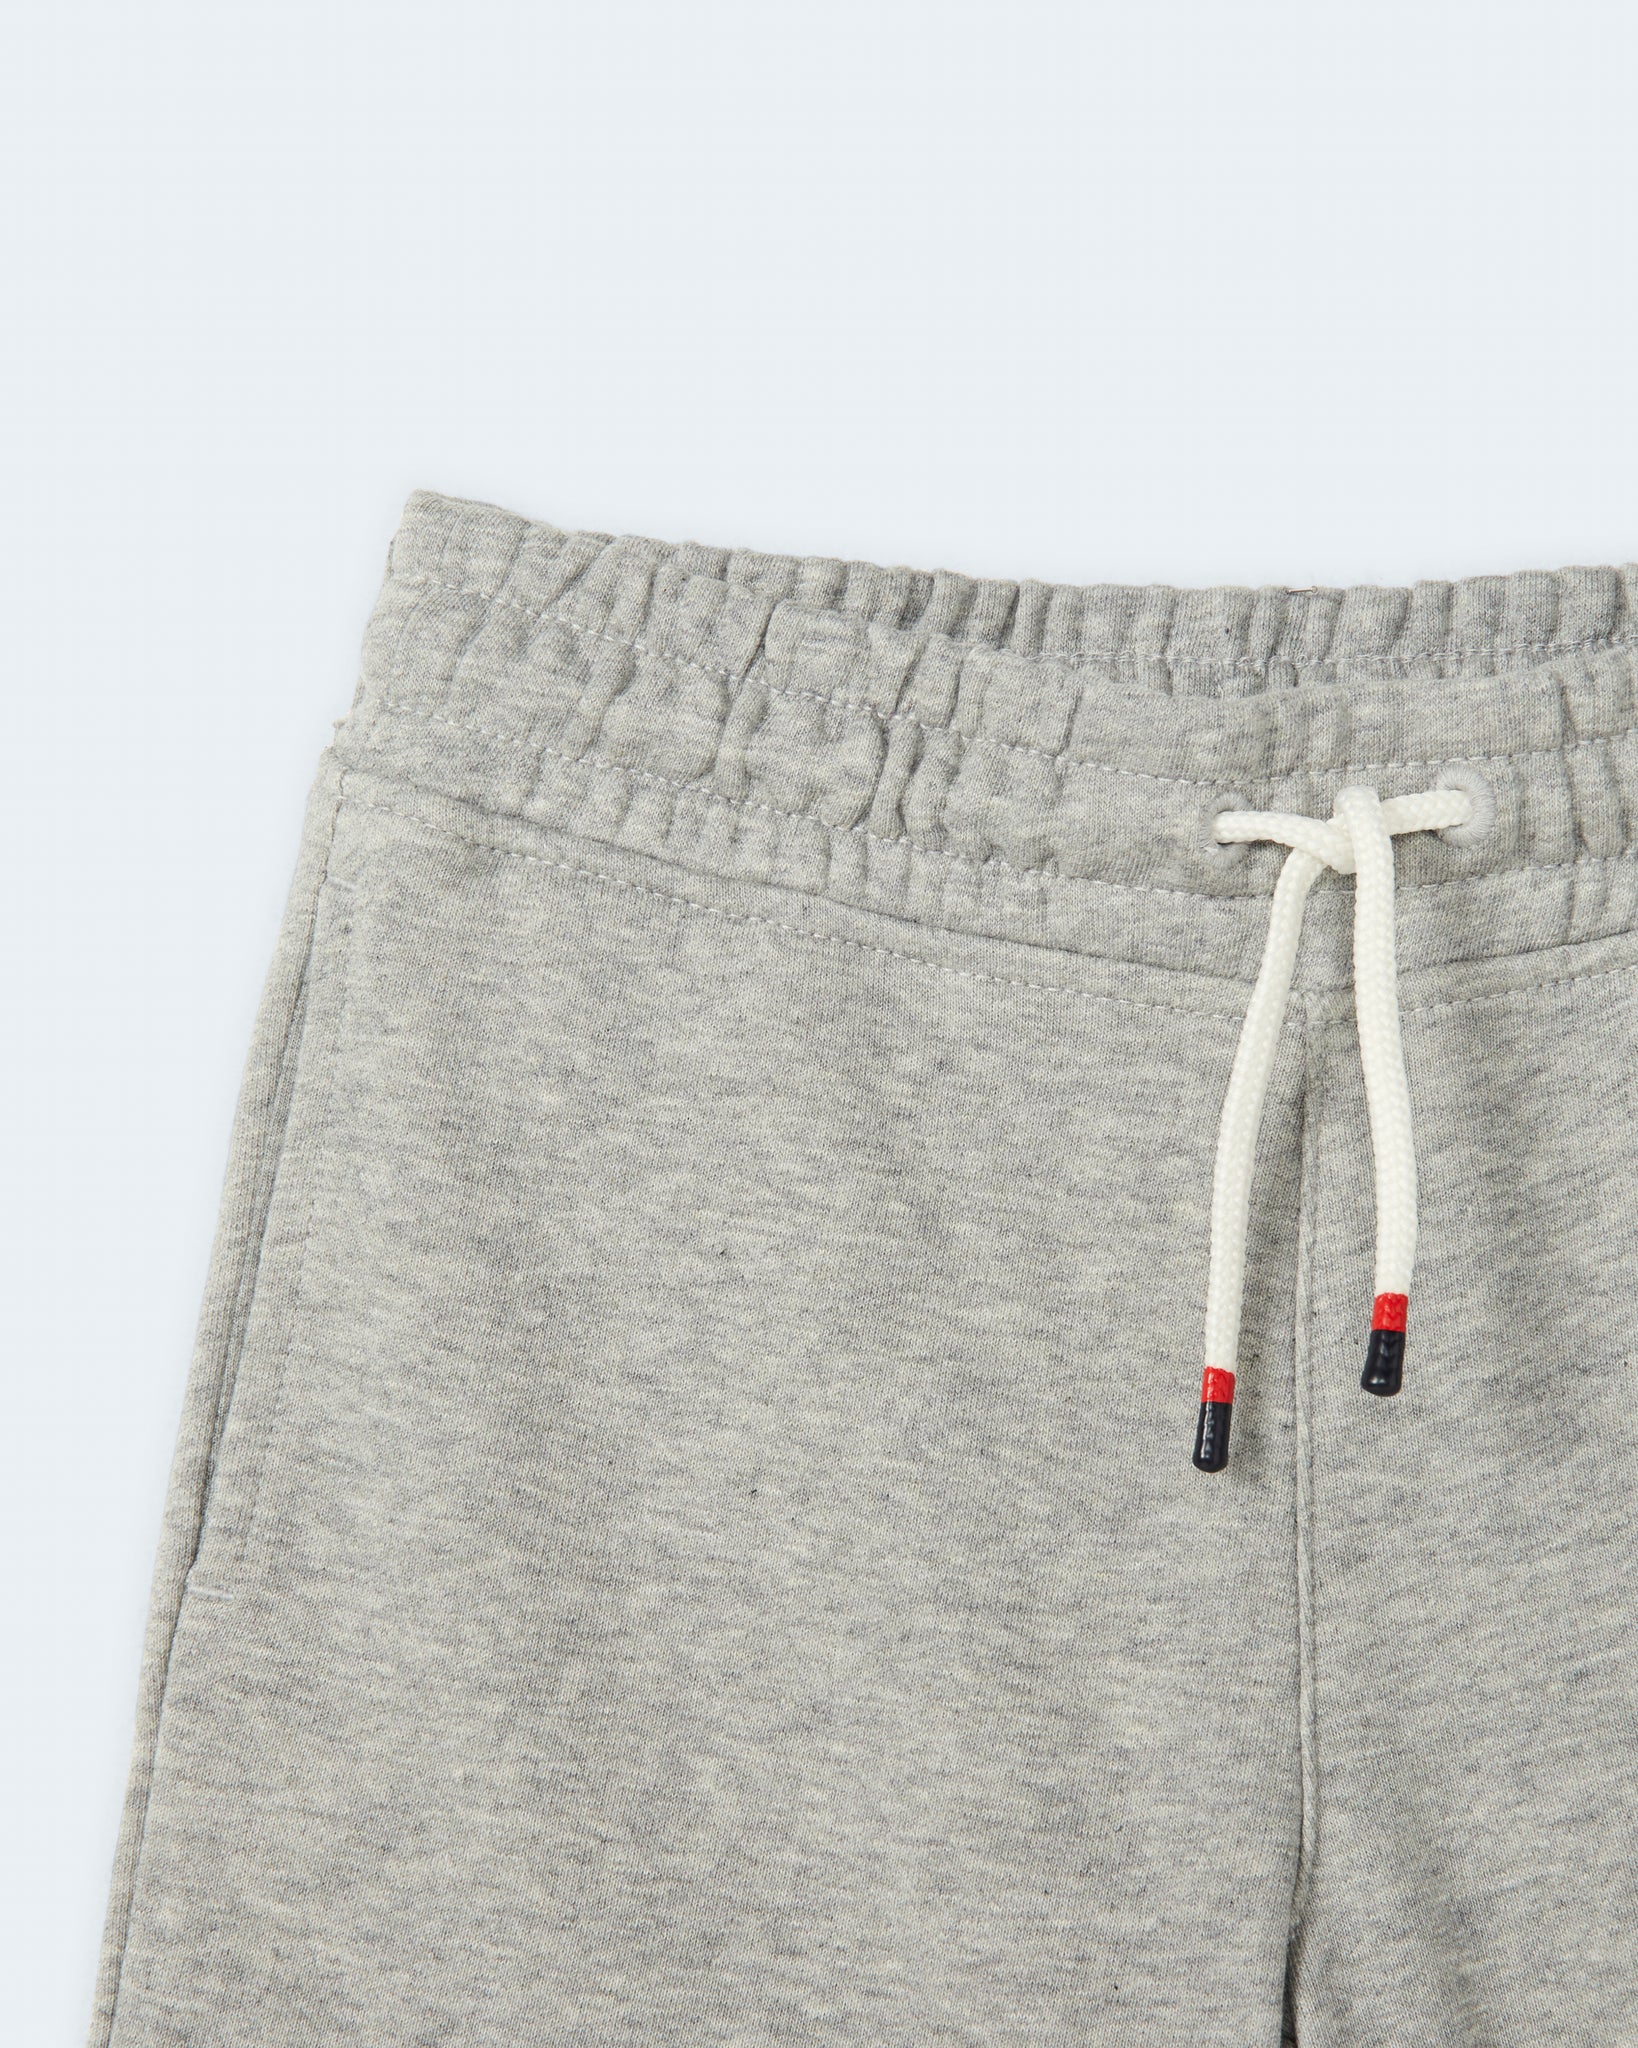 Hero Knit Shorts (Boys) - Grey